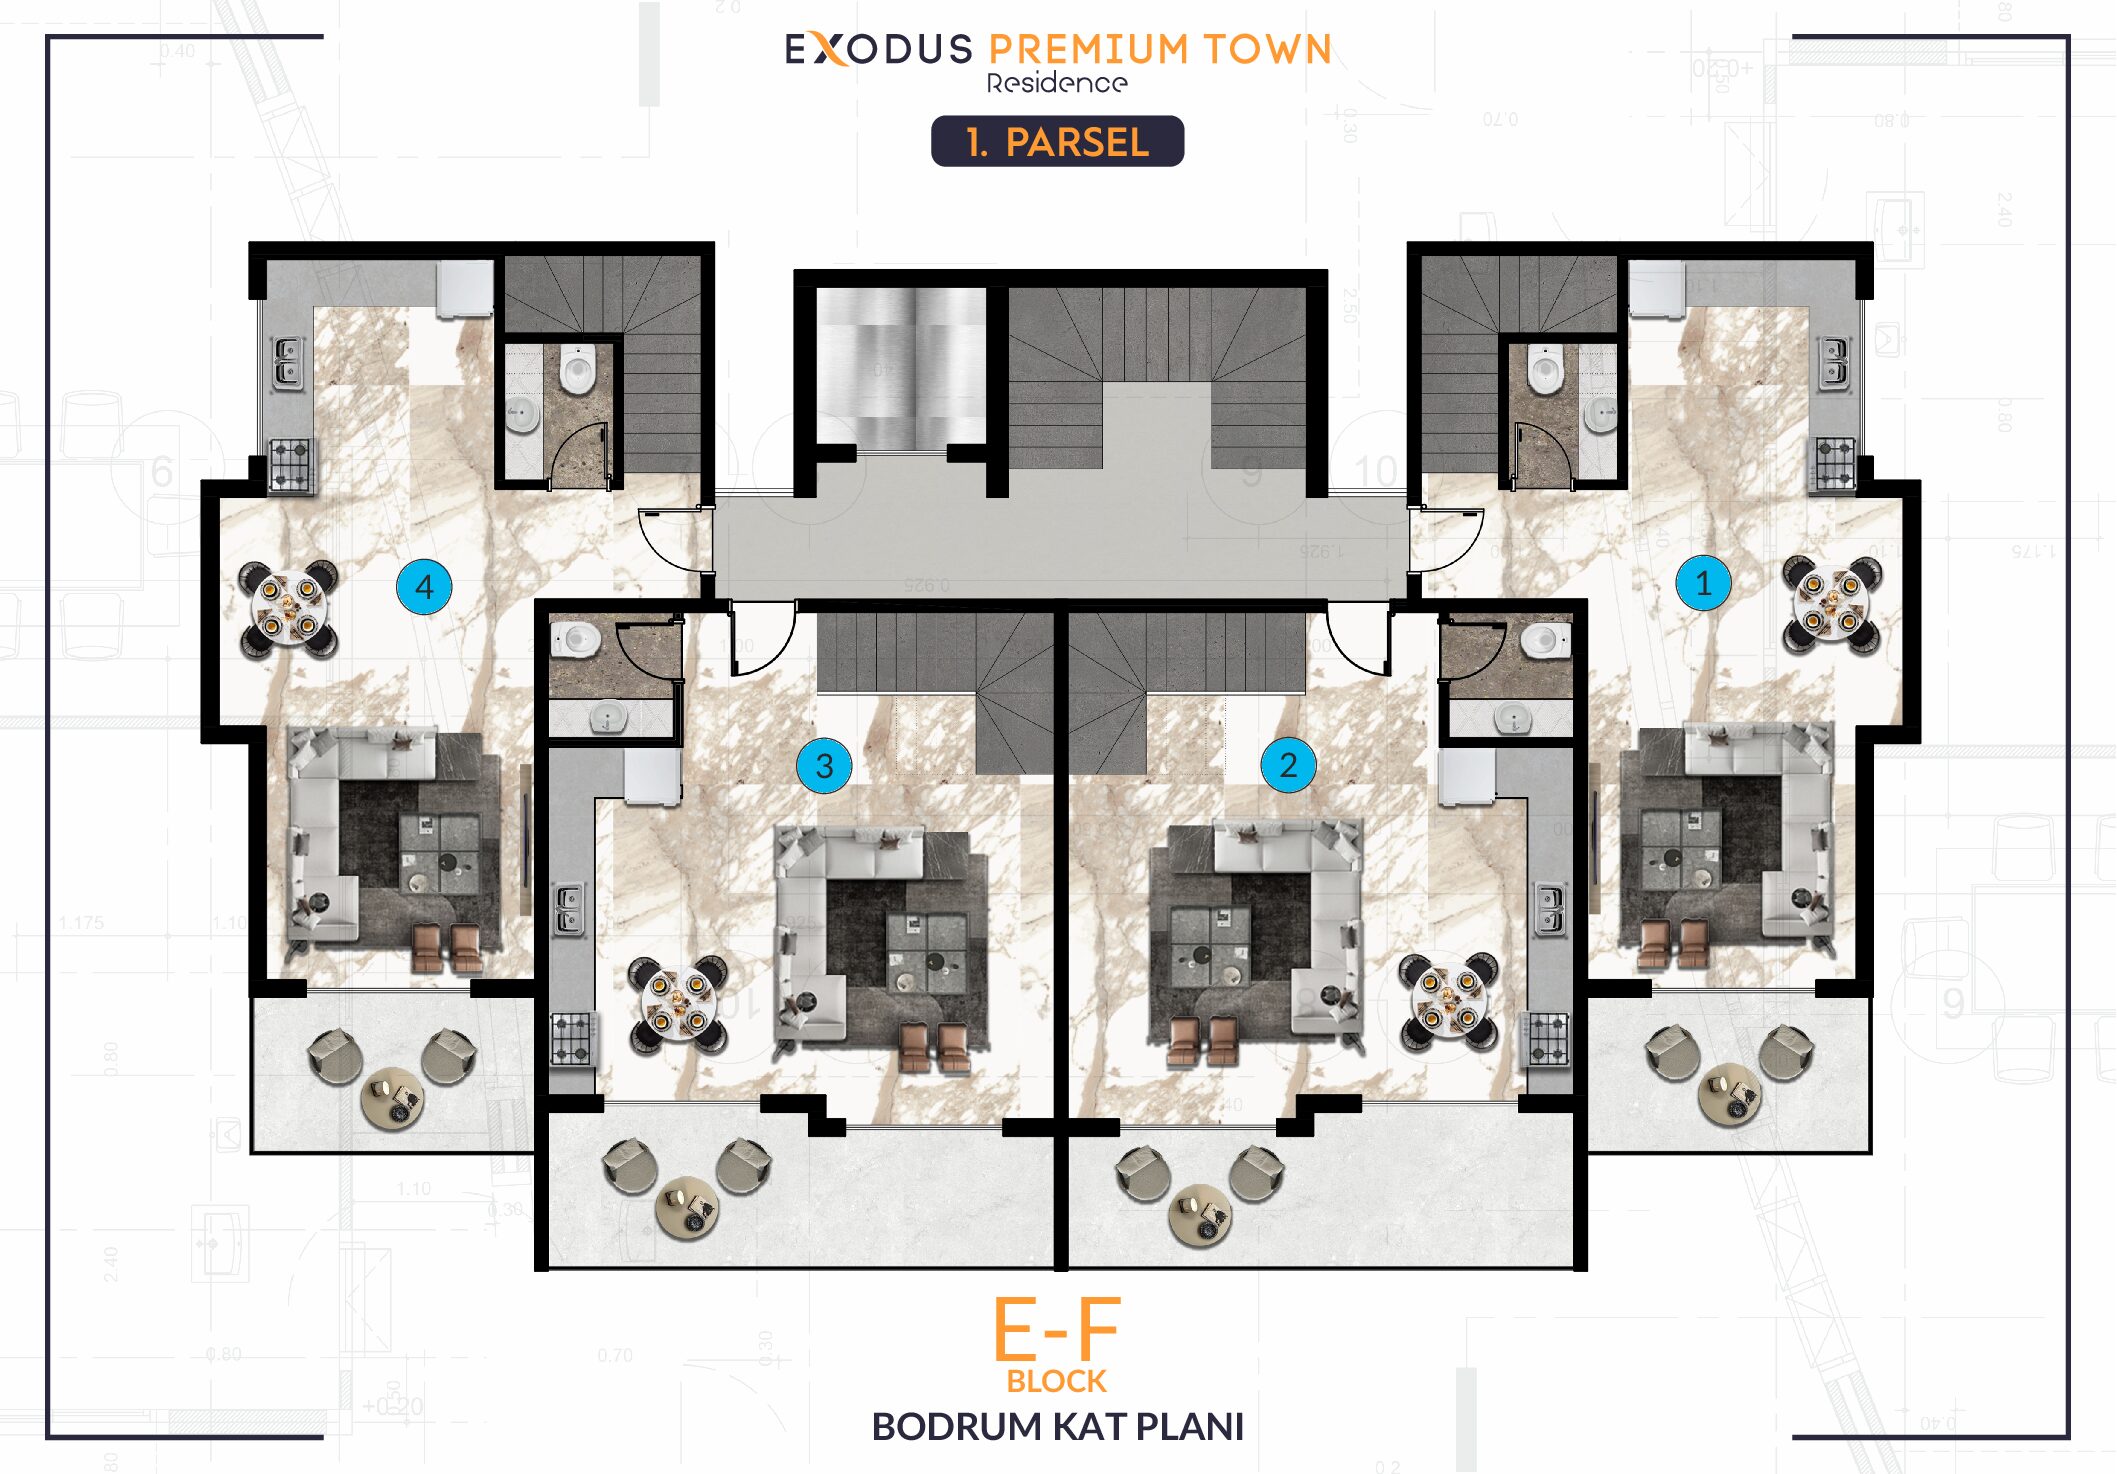 1.Parcel E-F Block Basement Floor Plan